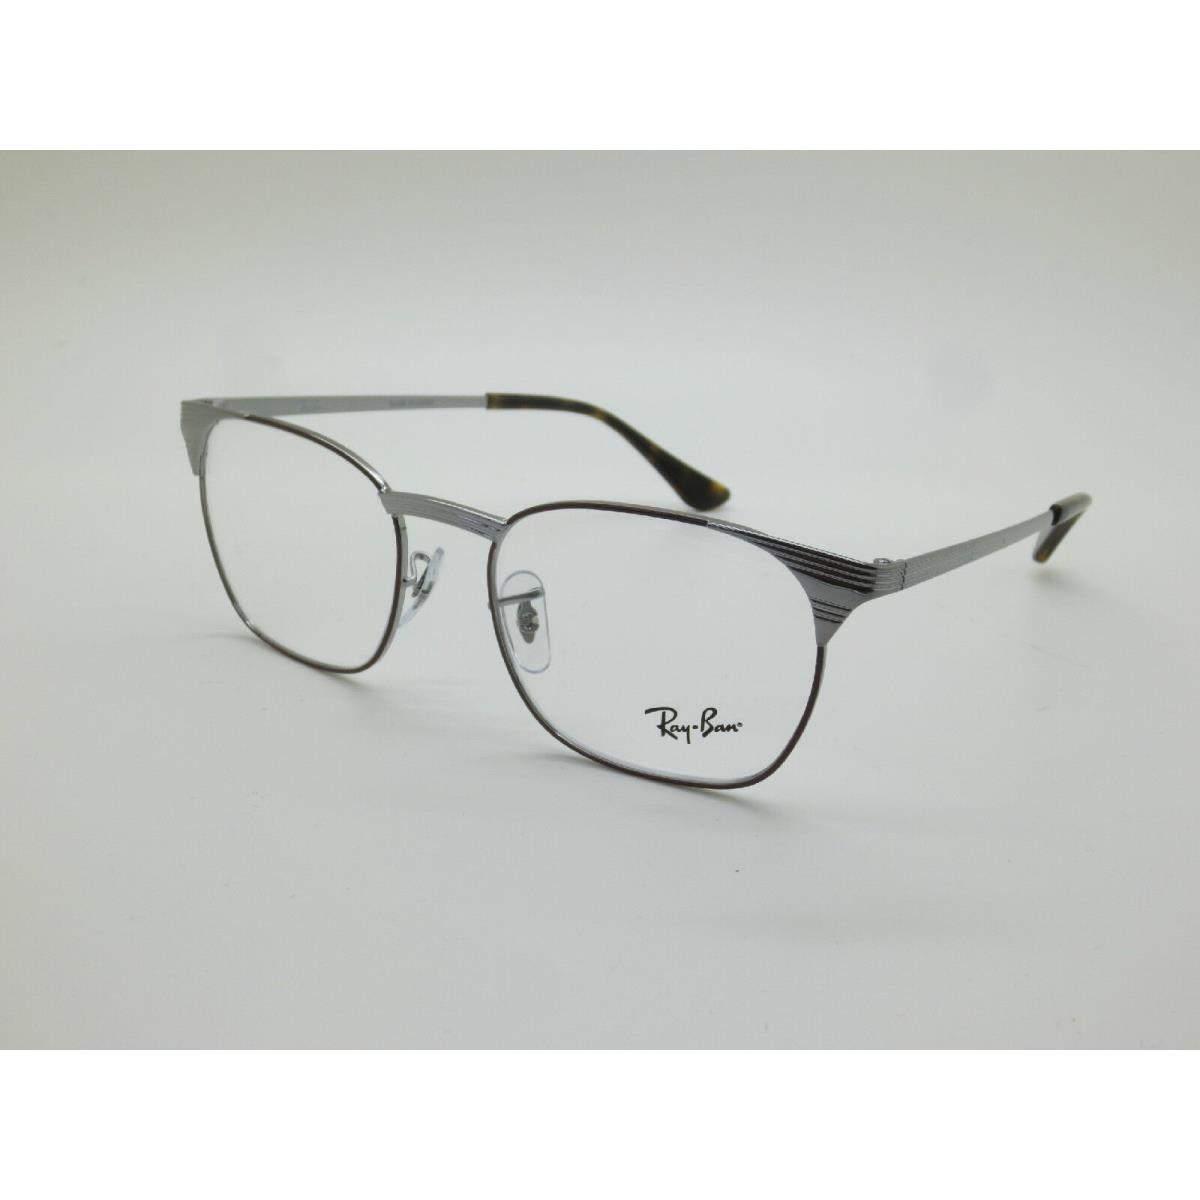 Ray-Ban eyeglasses  - Brown/Gunmetal Frame 0